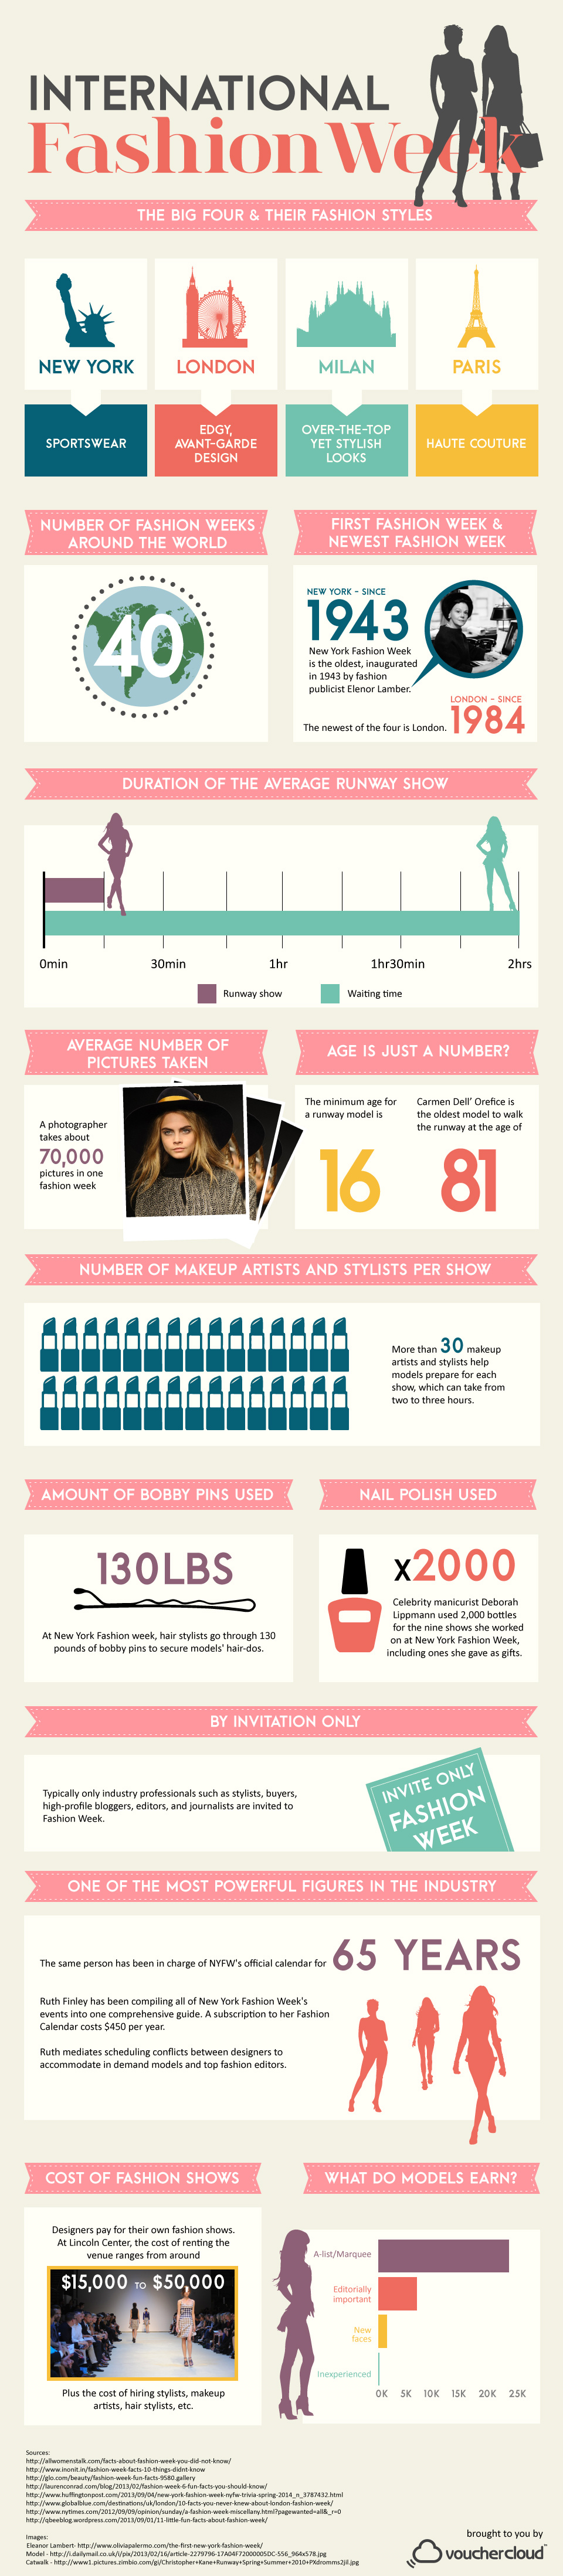 International Fashion Week Infographic